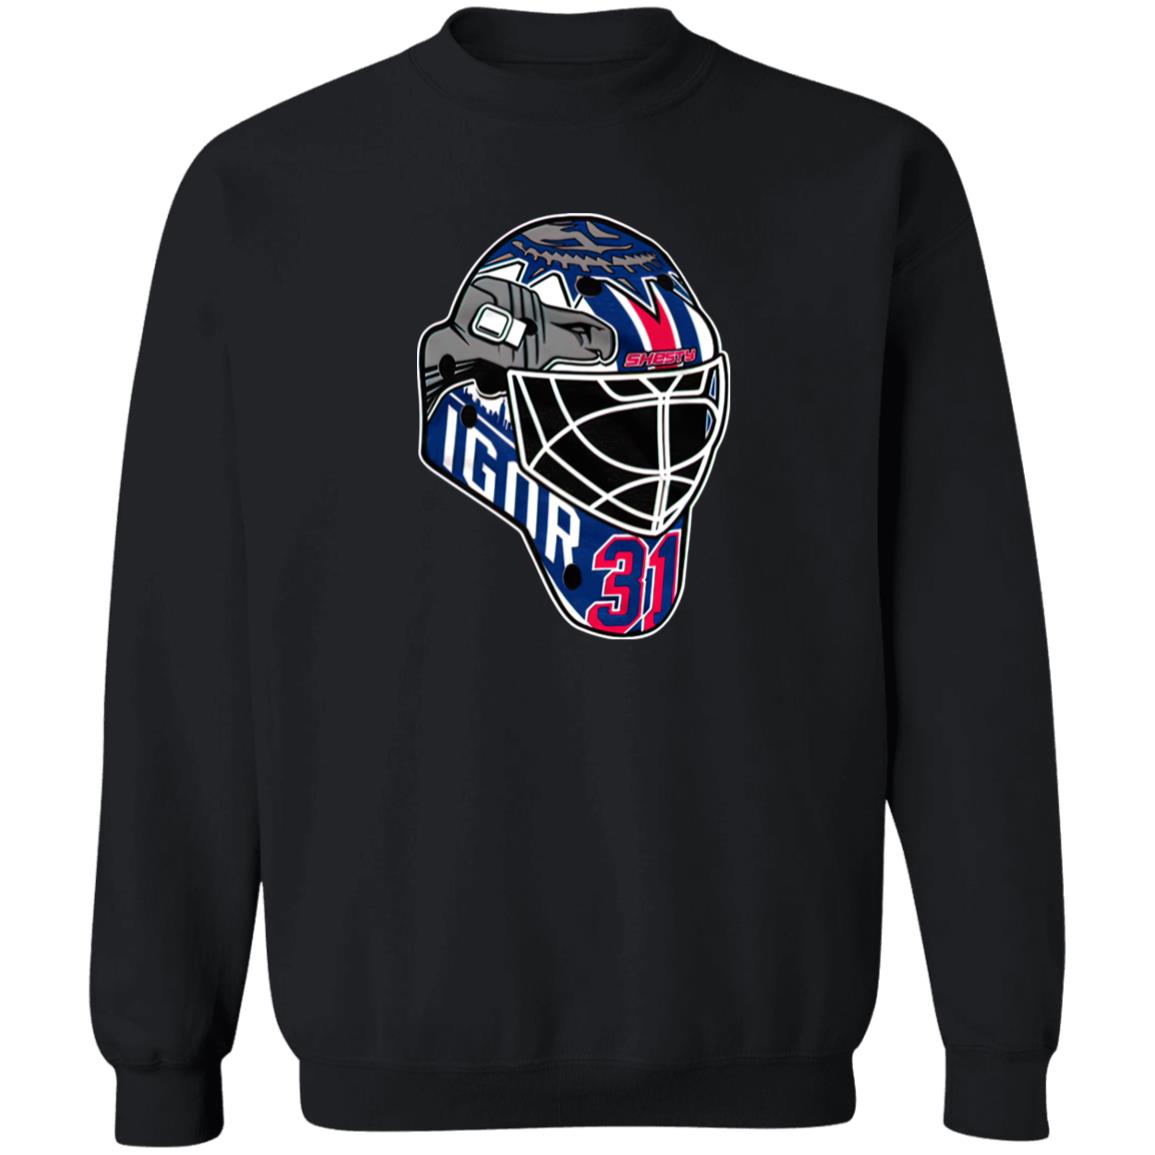 Webleedblue Merch Igor Mask Shirt New York Rangers